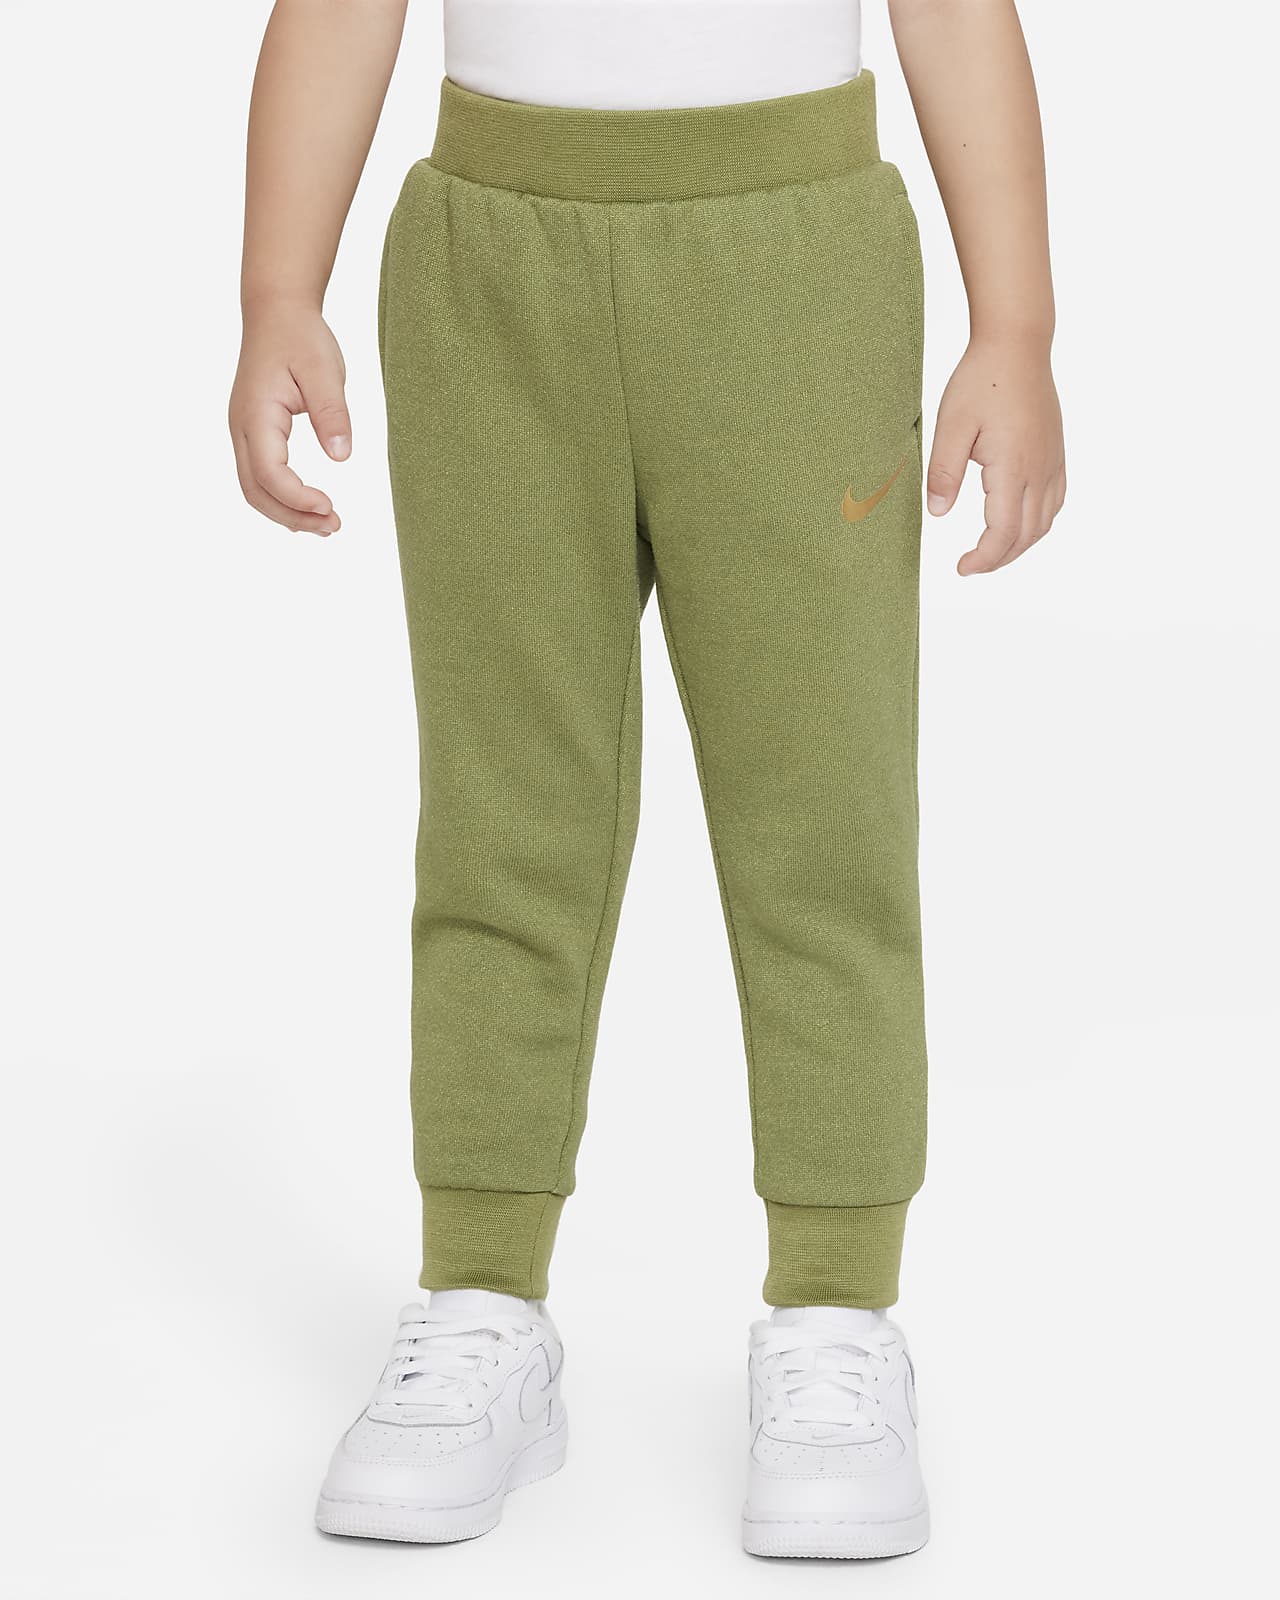 Pants de tejido Fleece moteado para niños pequeños Nike